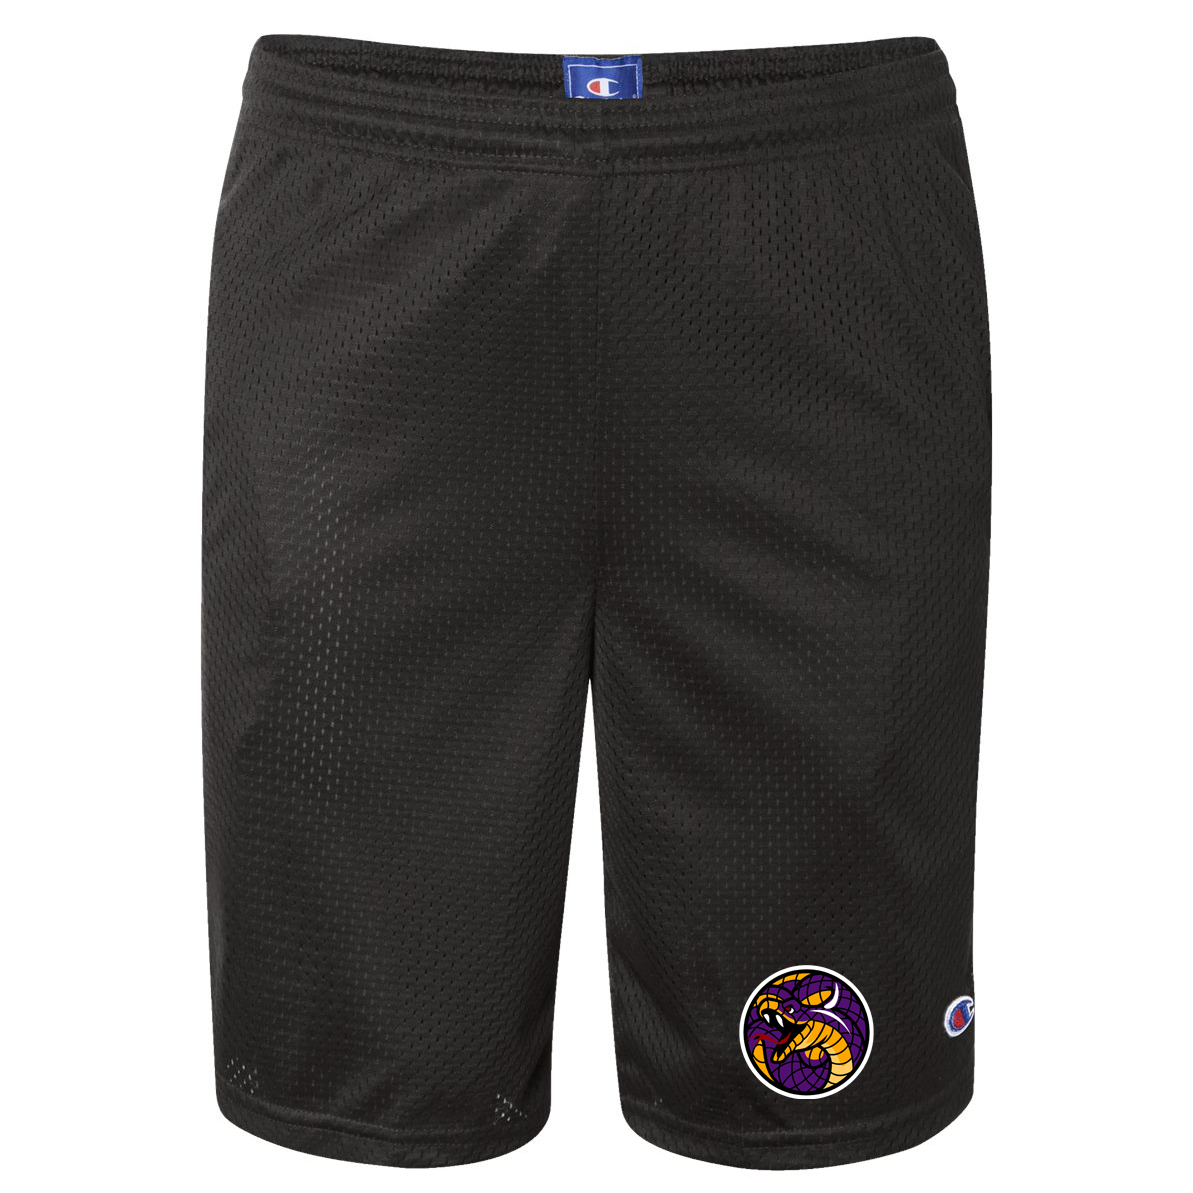 Mambas Basketball Champion Mesh Shorts with Pockets